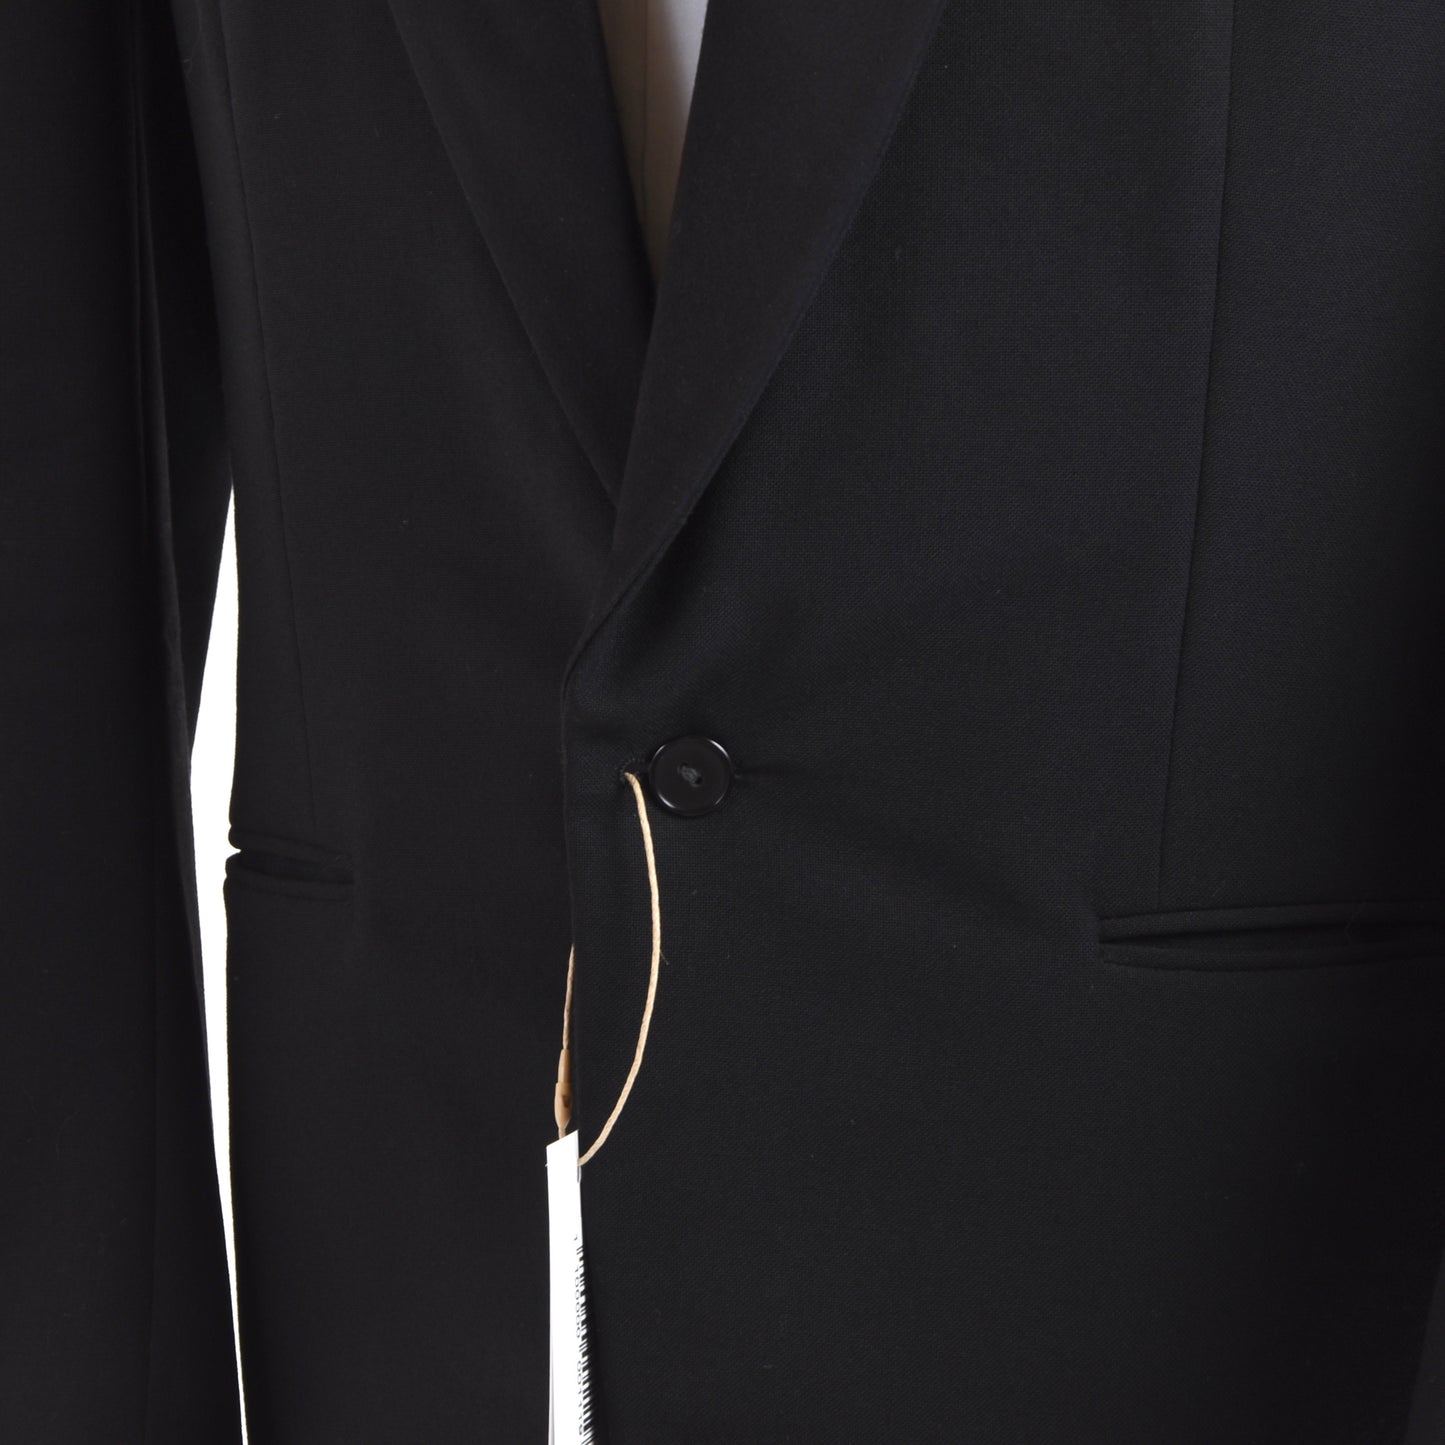 Vintage Handmade Shawl Collar Tuxedo - Black